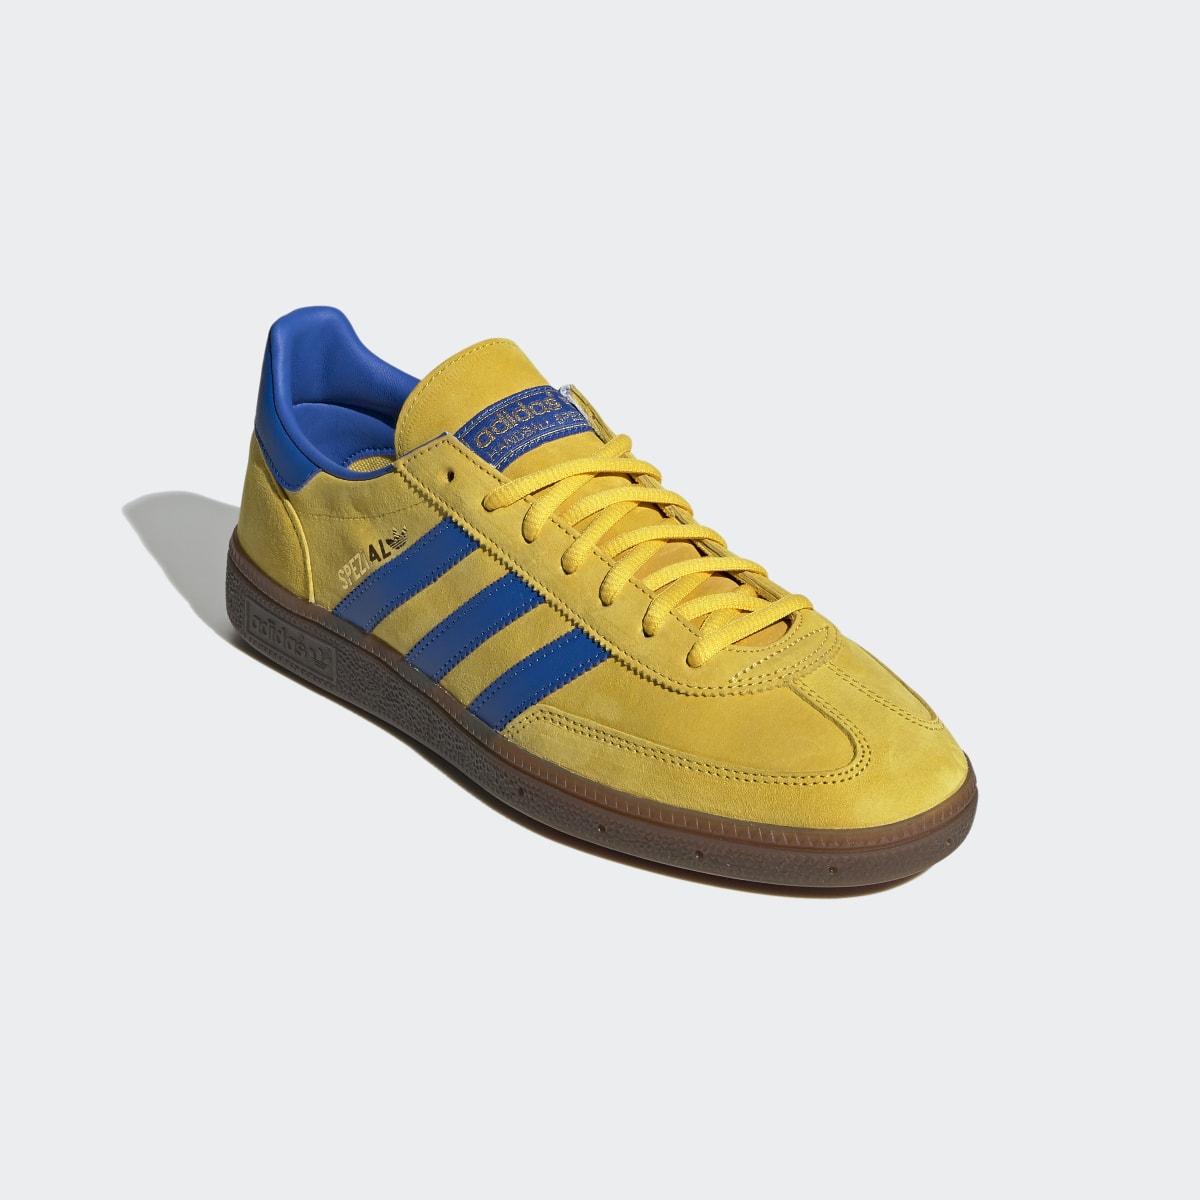 Adidas Handball Spezial Shoes. 6